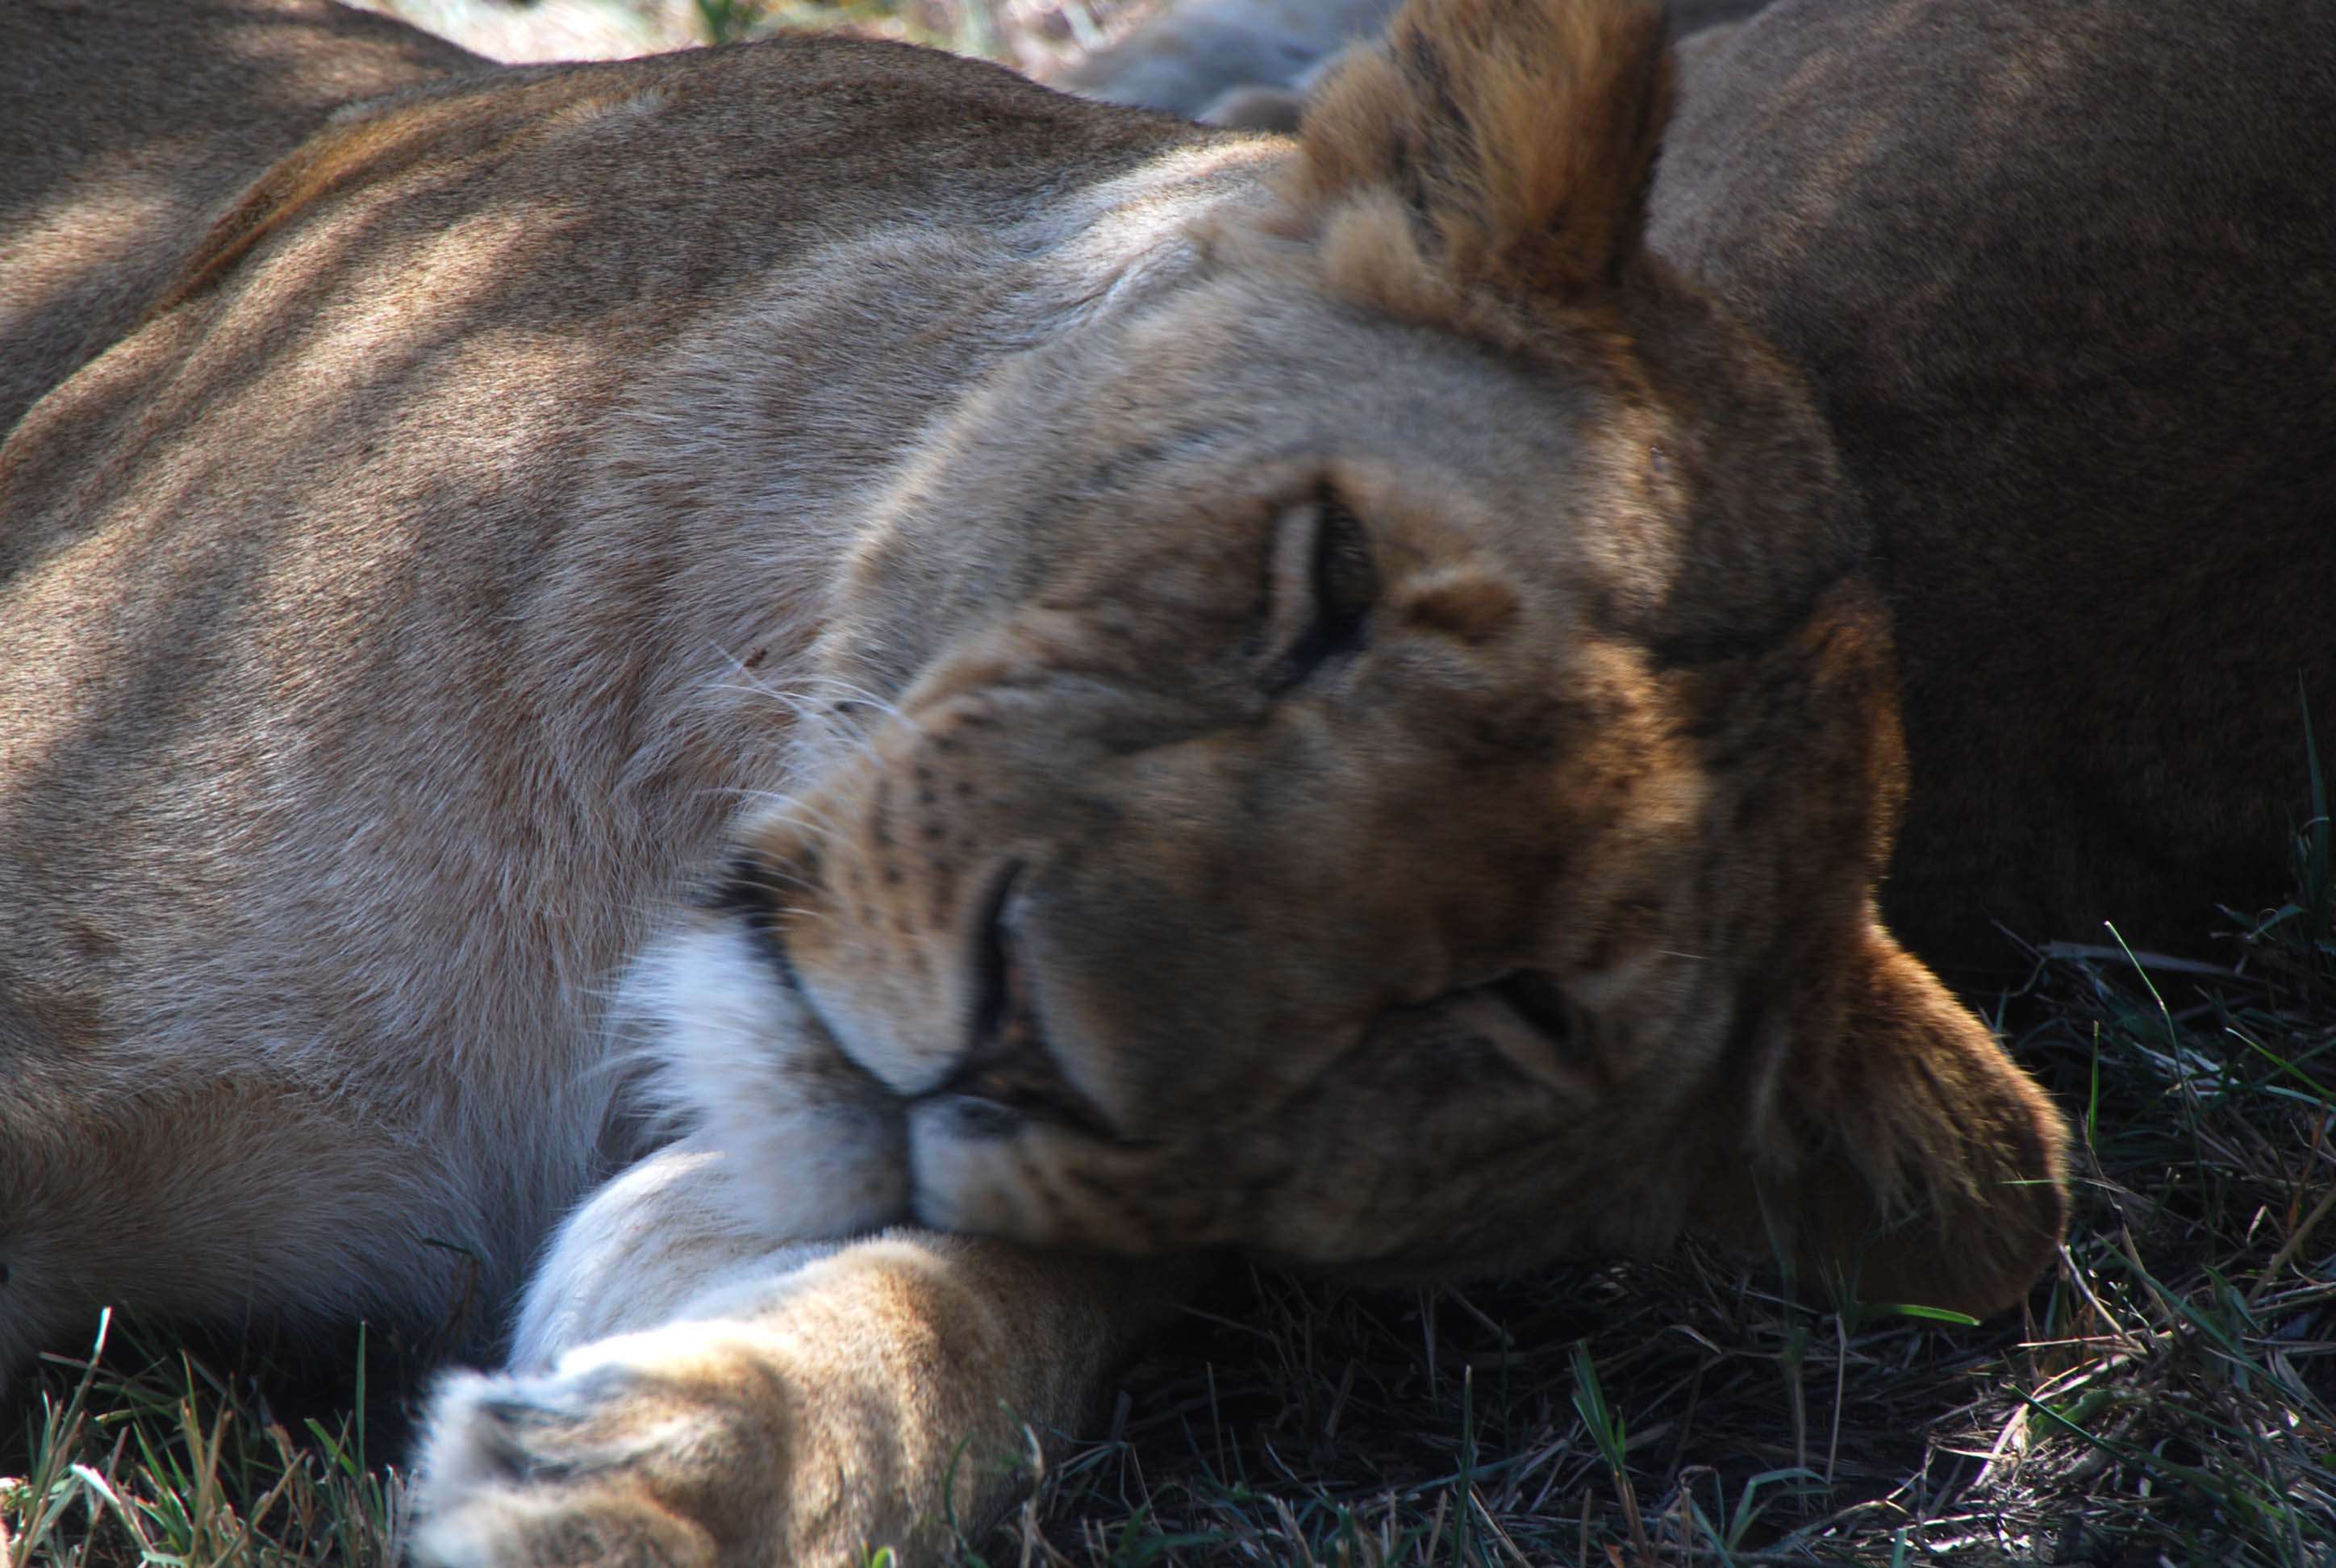 Nuestro primer safari - Regreso al Mara - Kenia (7)